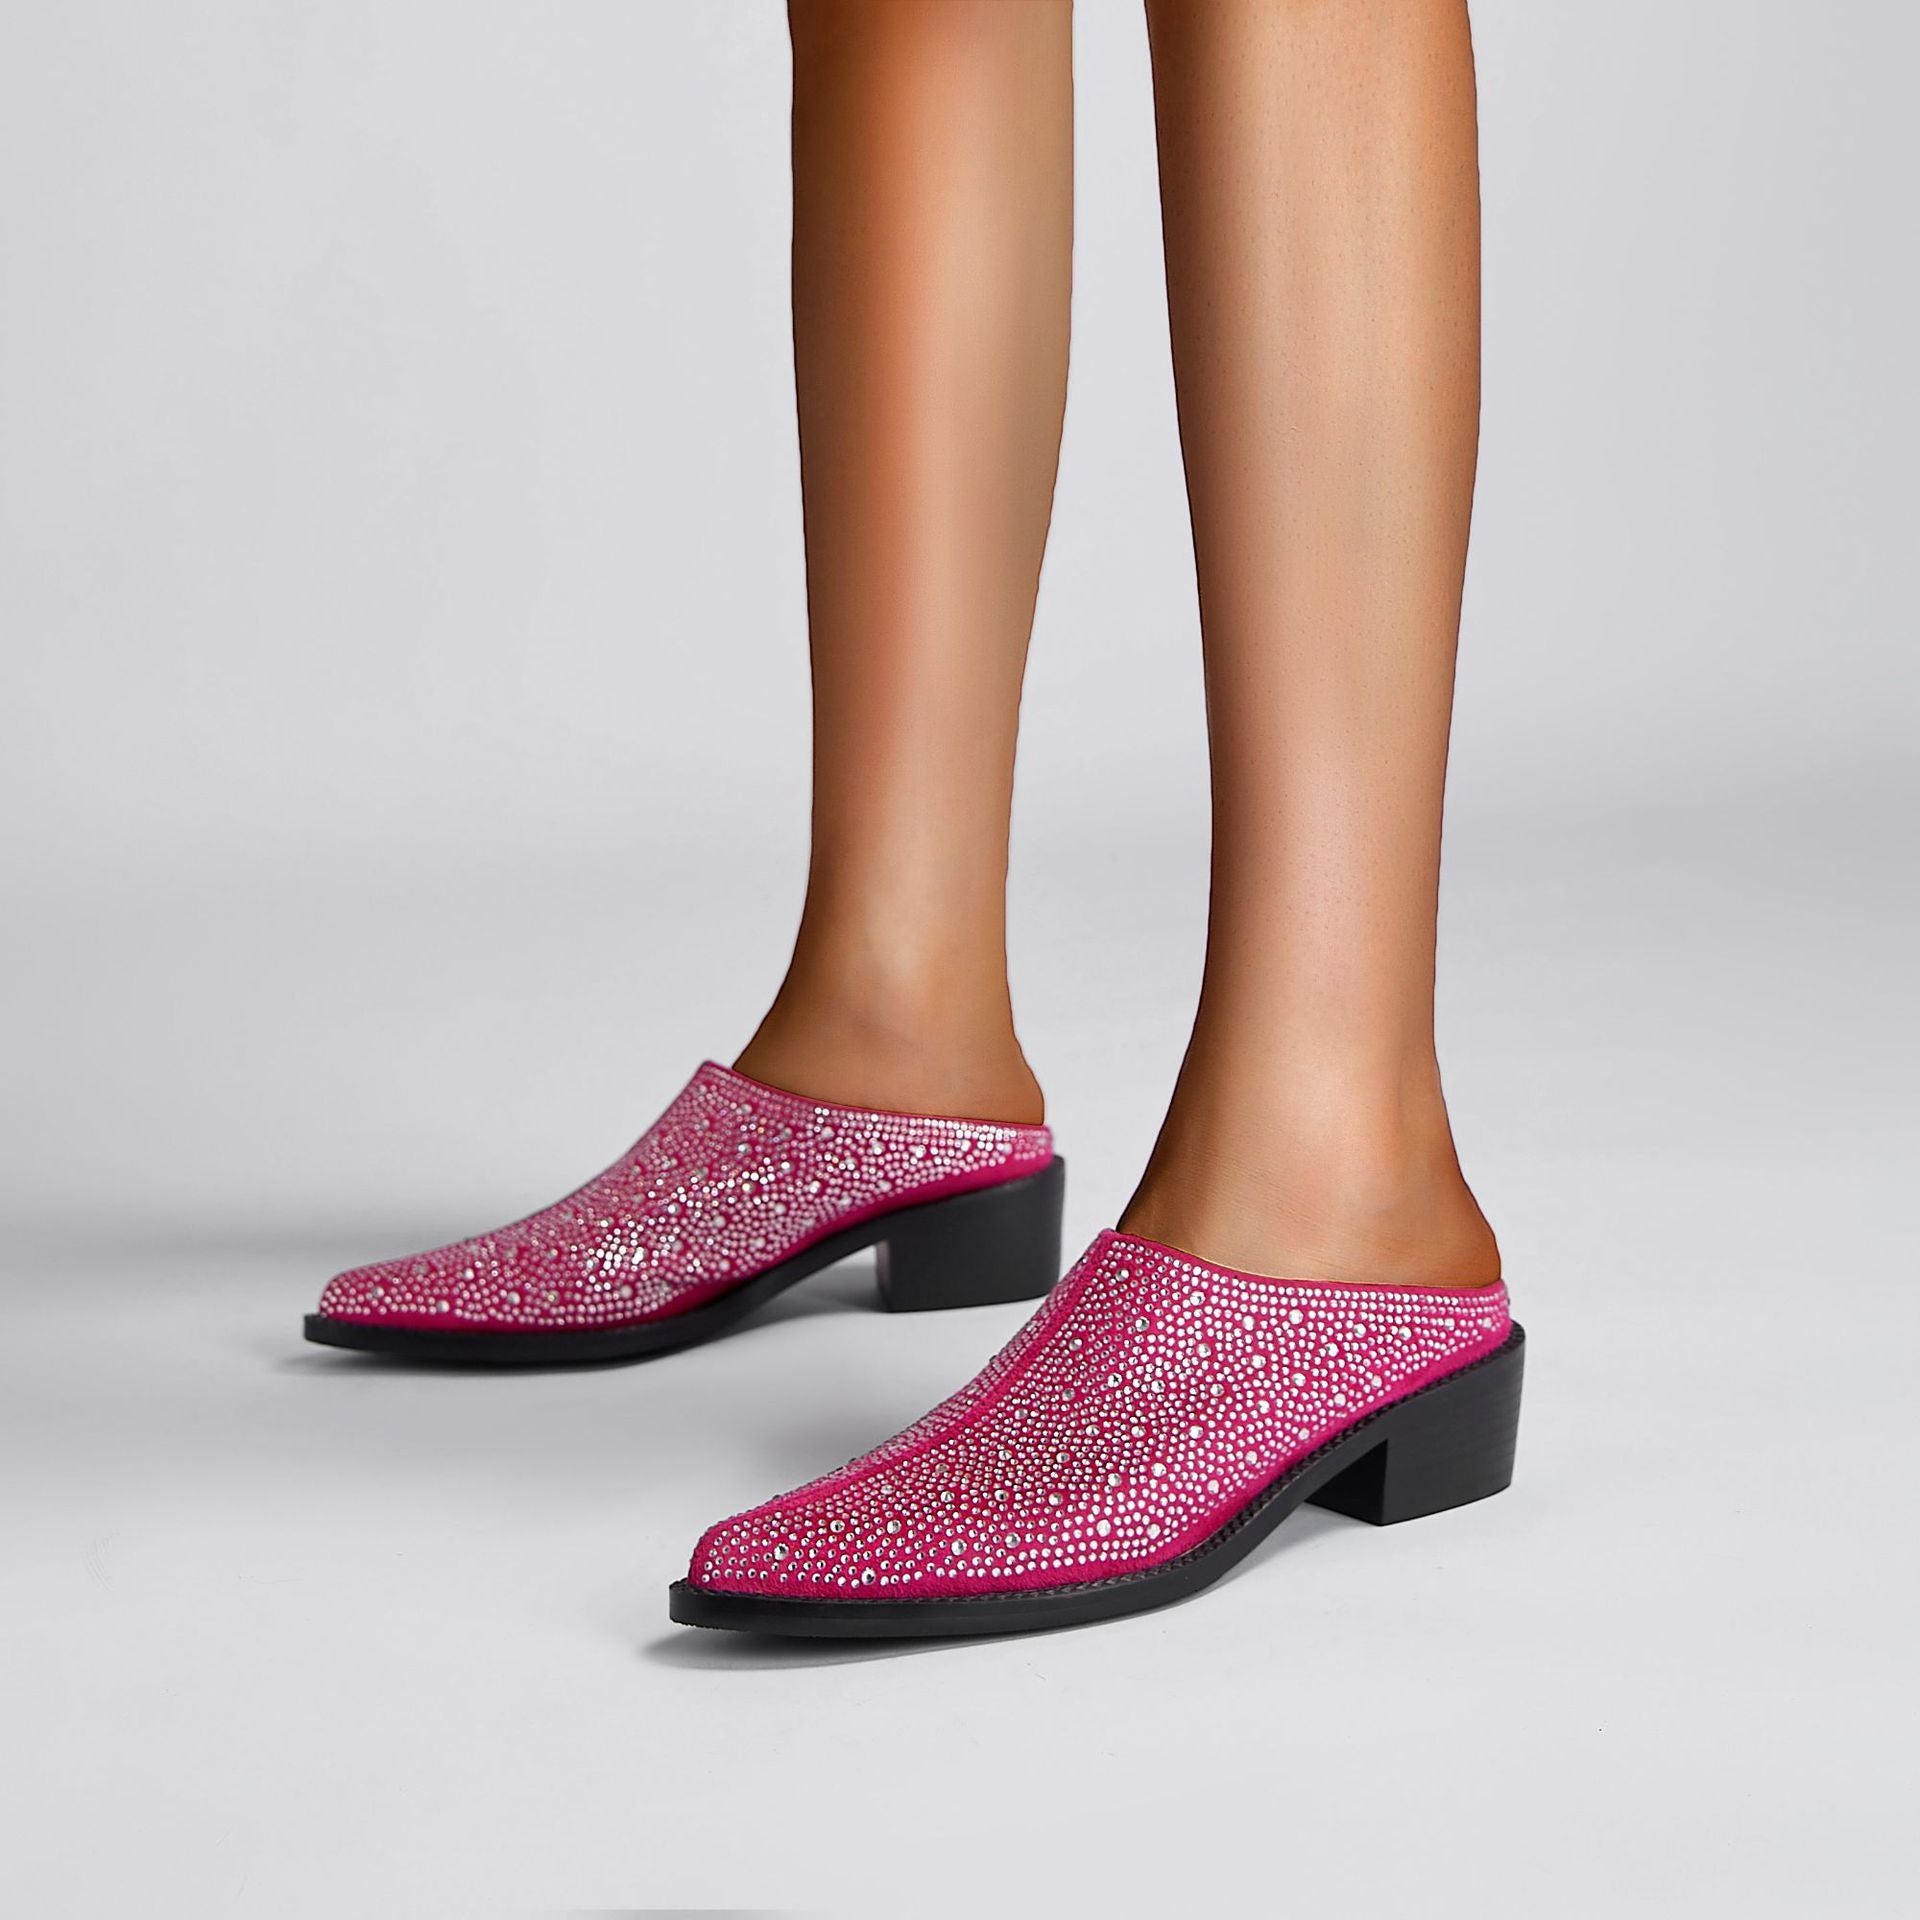 Women's Fashion All-match Rhinestone Full Diamond Pointed Toe Toe Cap Flat Heel Square Heel Sandals Slippers